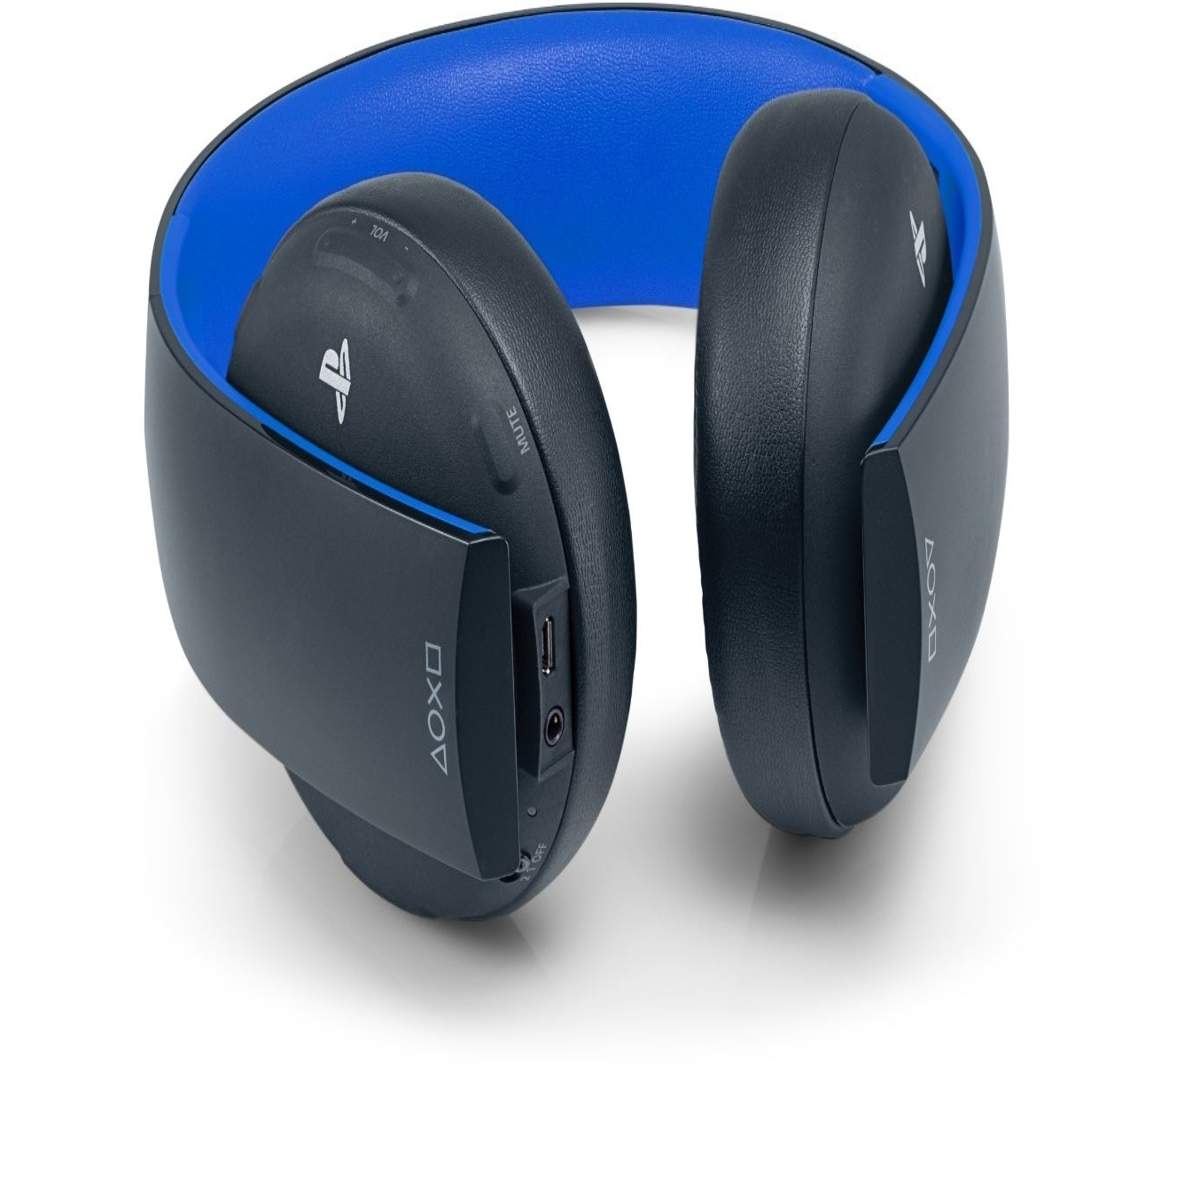 Sony Wireless Headset 2.0 review